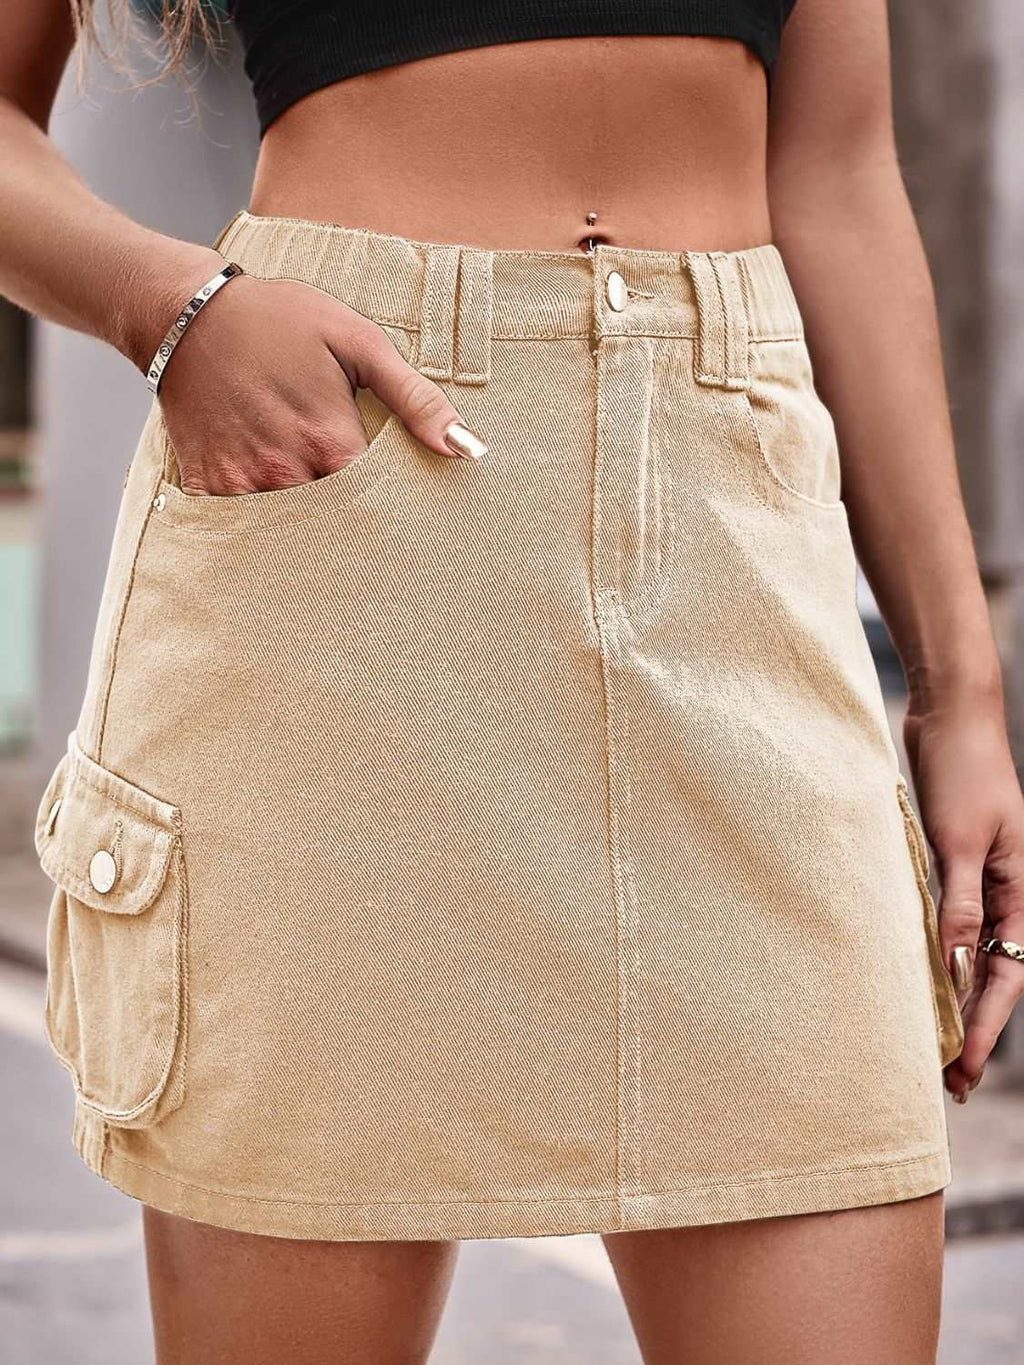 Denim Mini Skirt with Pockets (3 Colors)  Krazy Heart Designs Boutique Tan S 